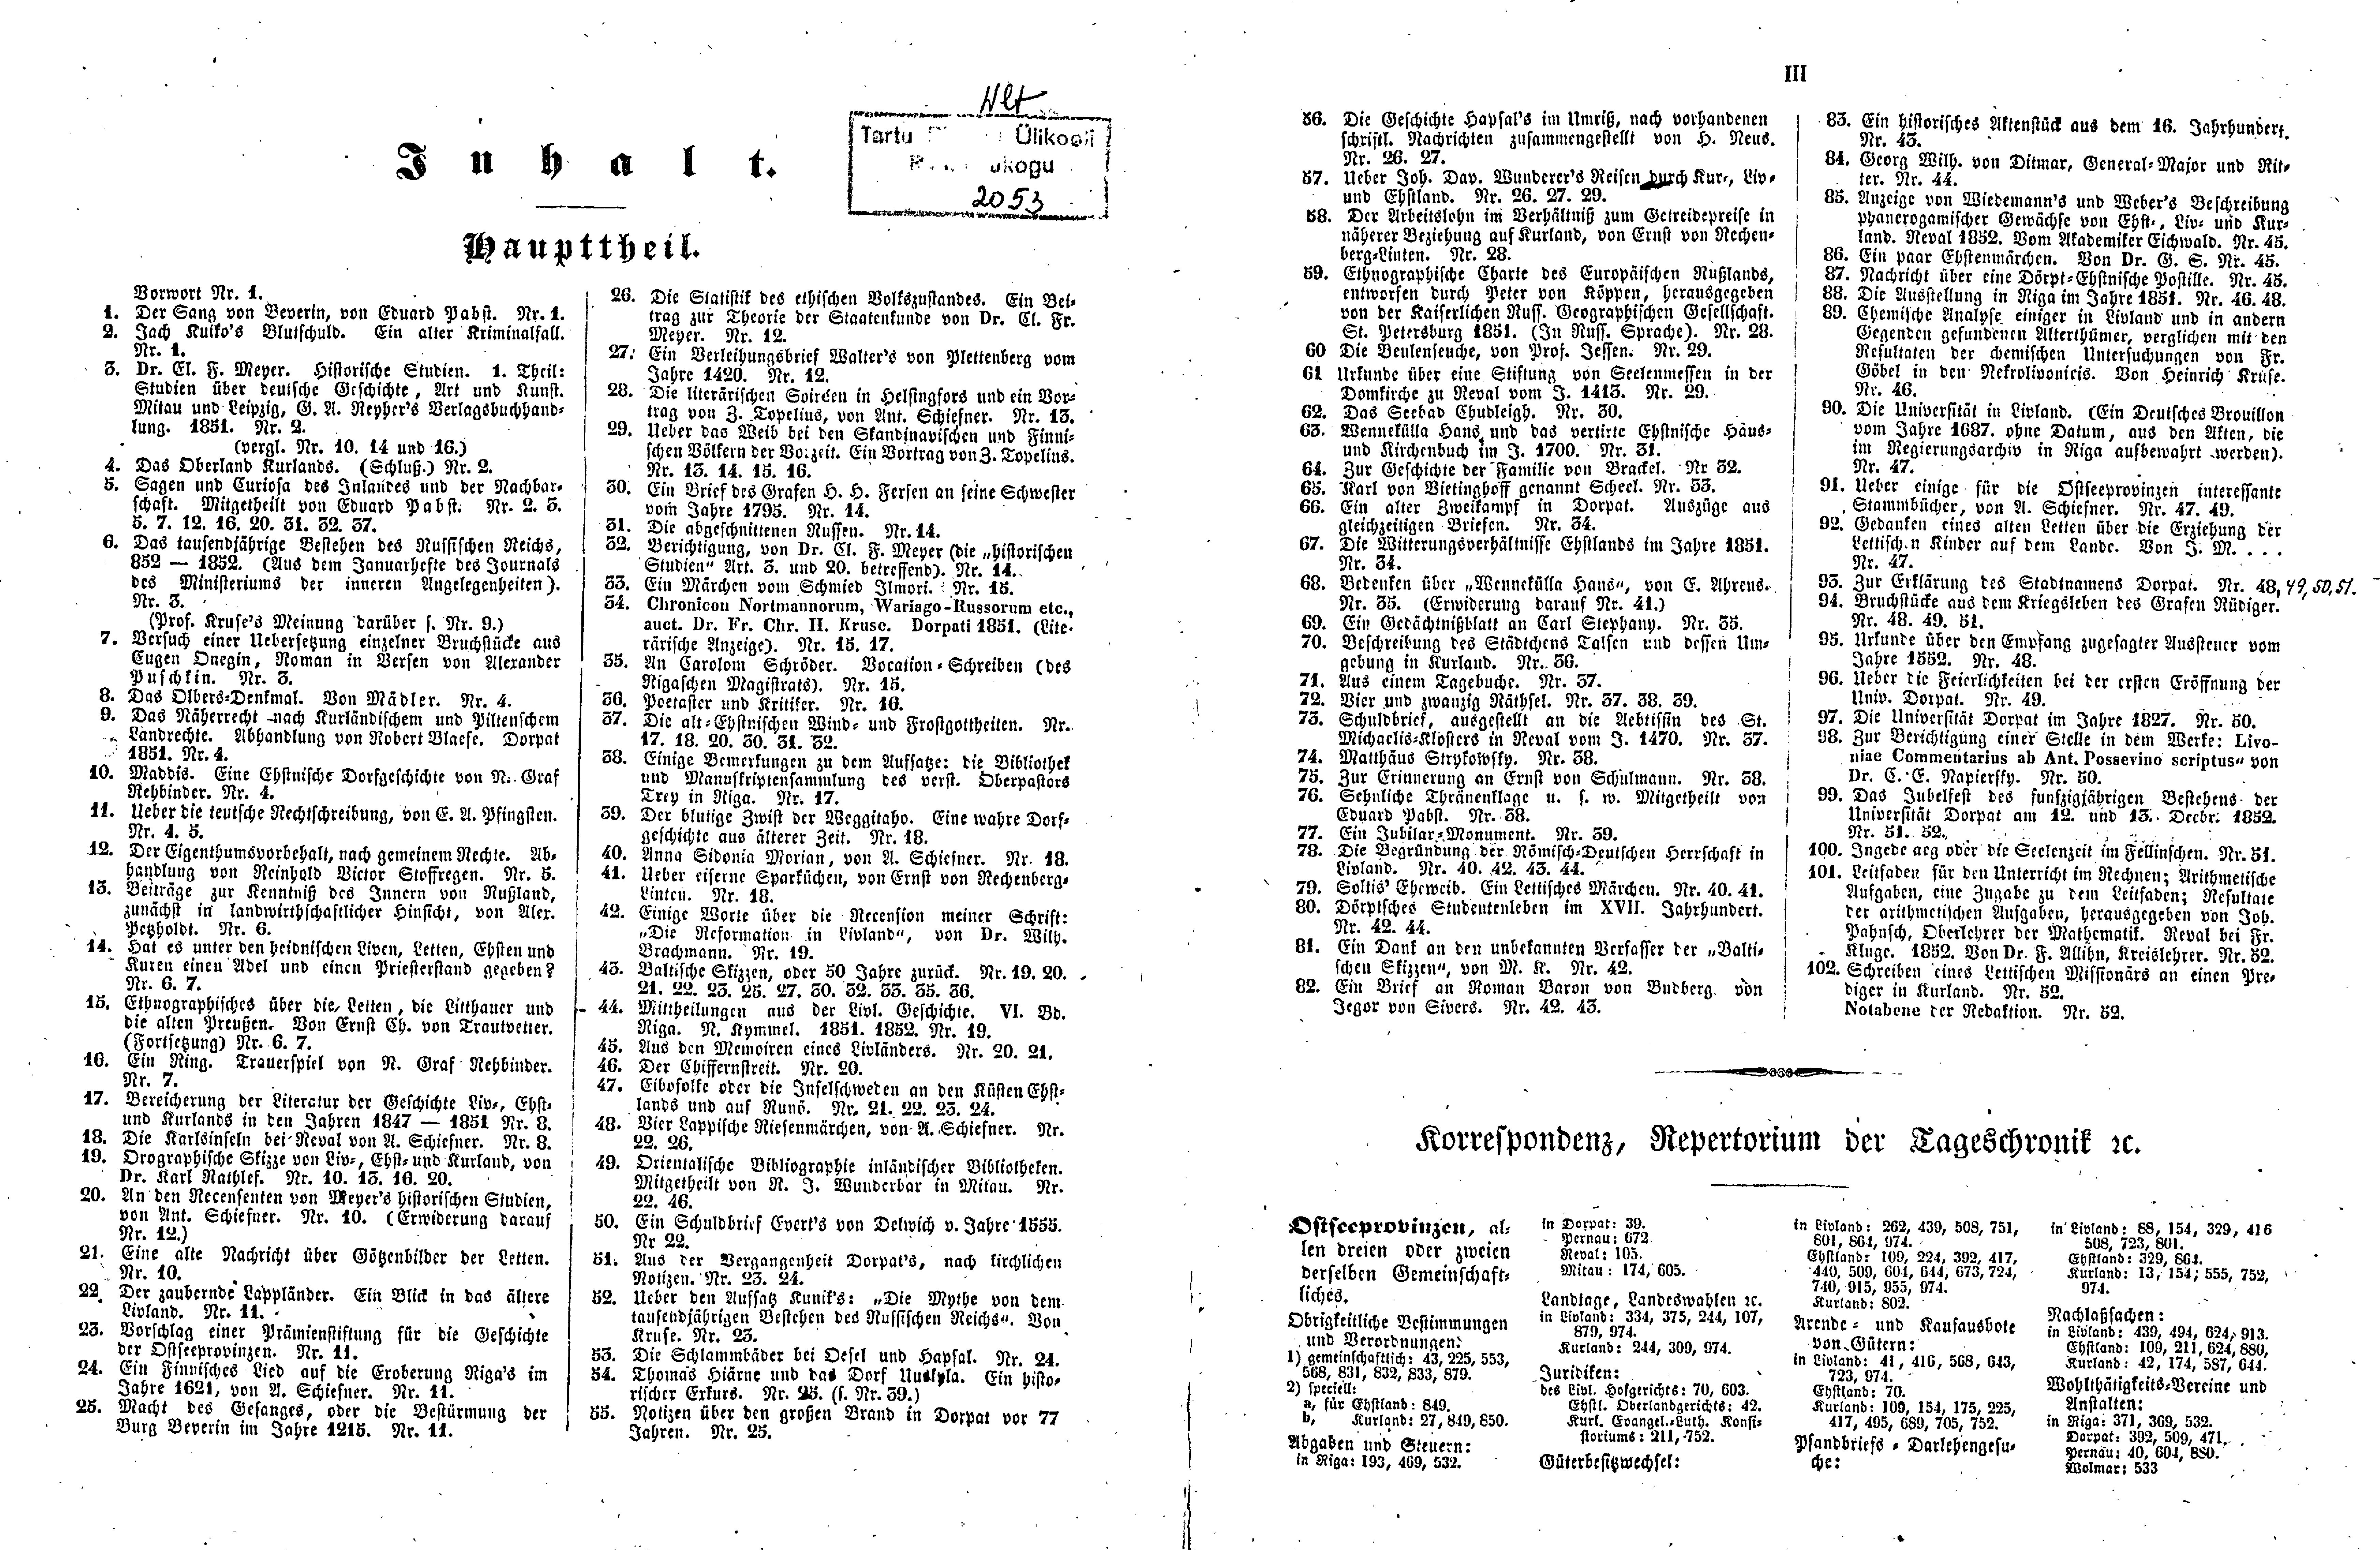 Das Inland [17] (1852) | 2. (II-III) Указатель